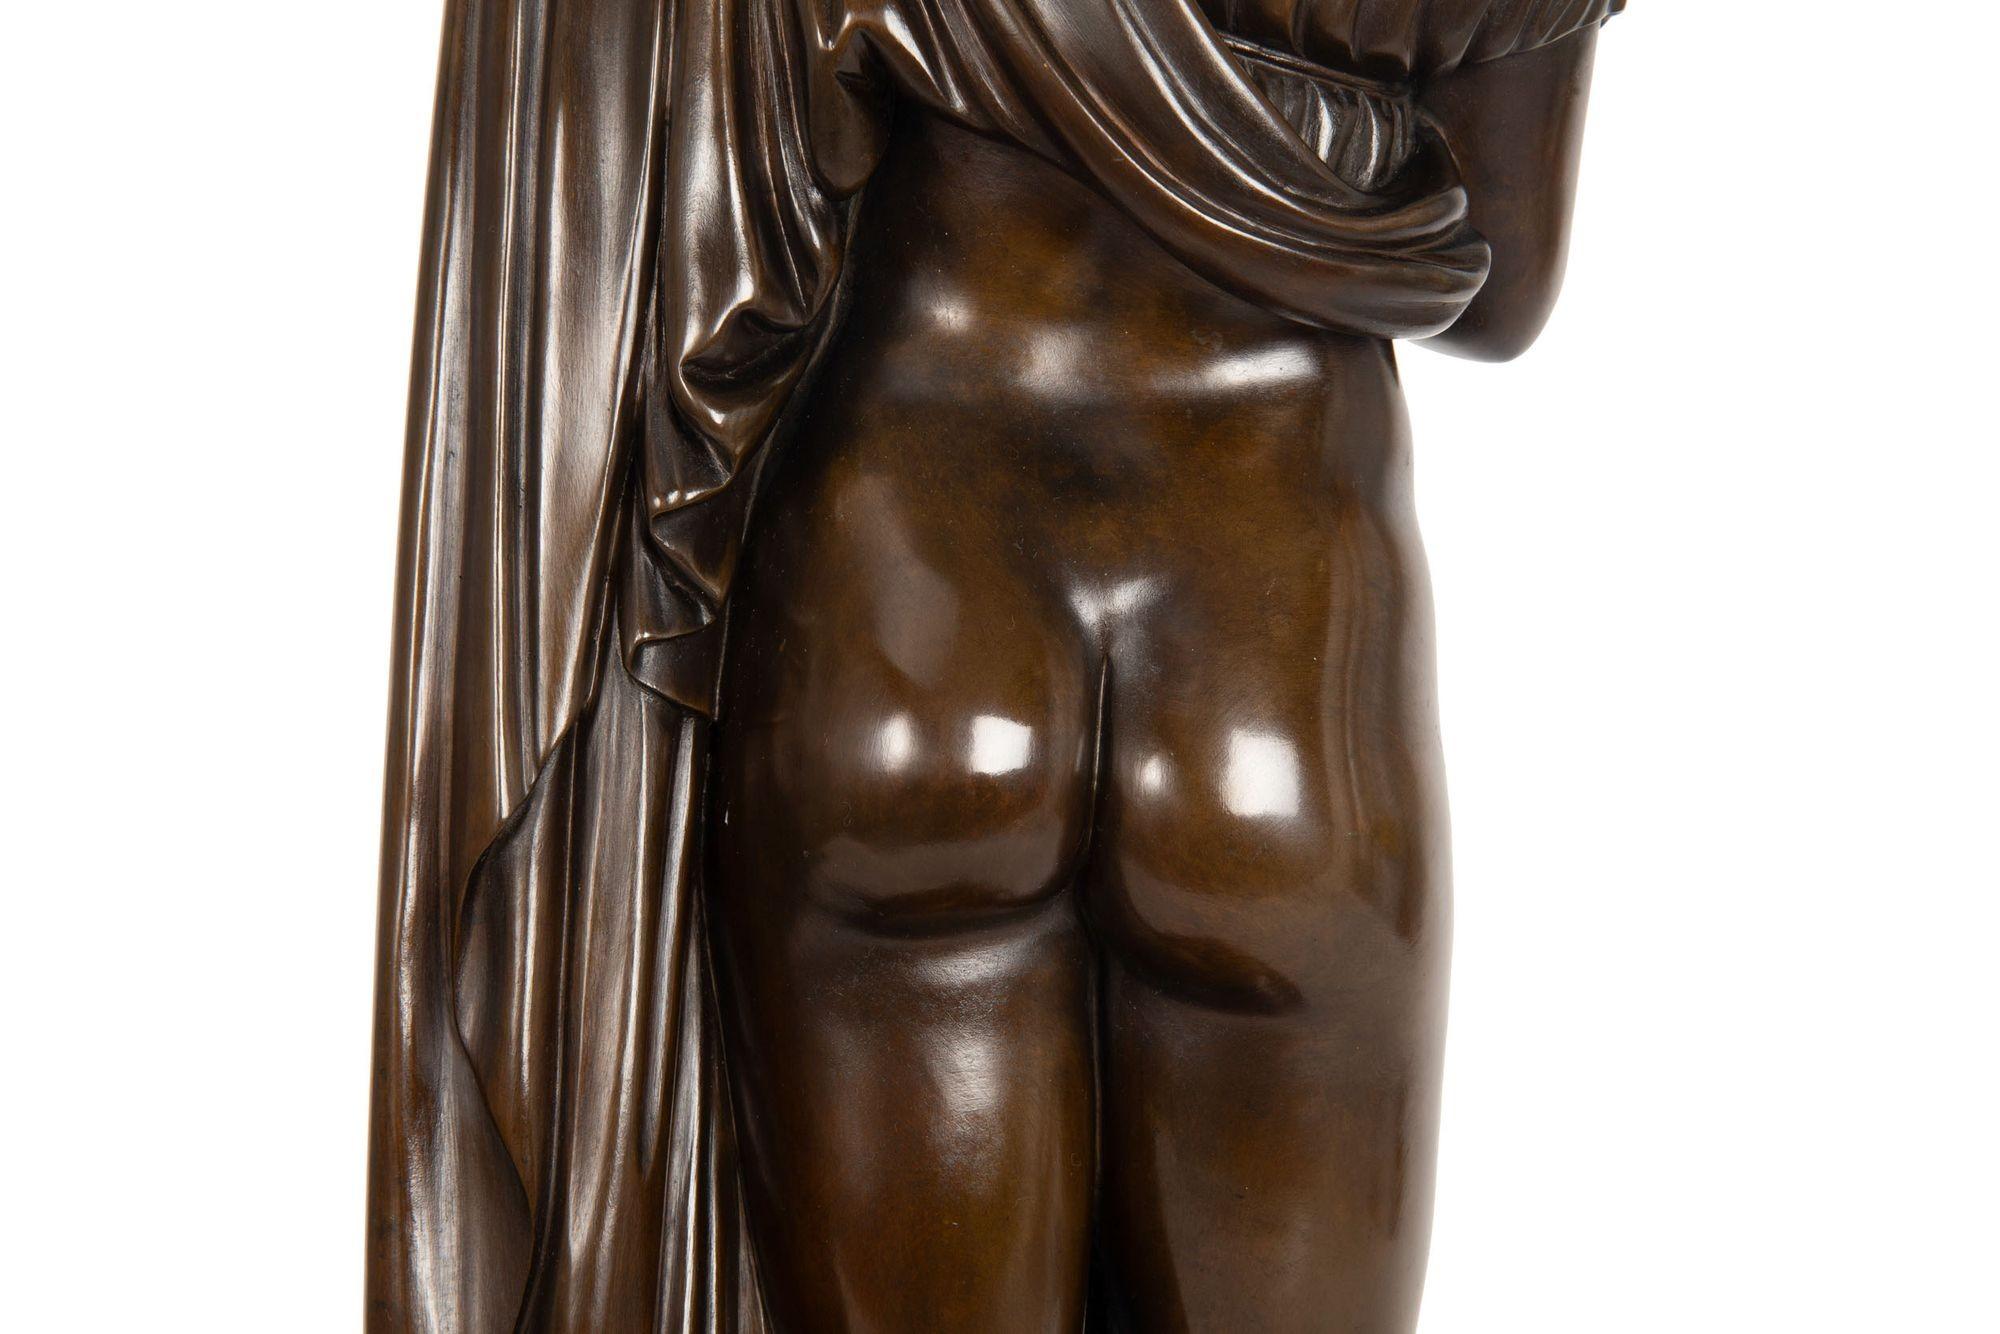 19th Century Grand Tour Bronze Sculpture “Callipygian Venus” of Antiquity For Sale 6